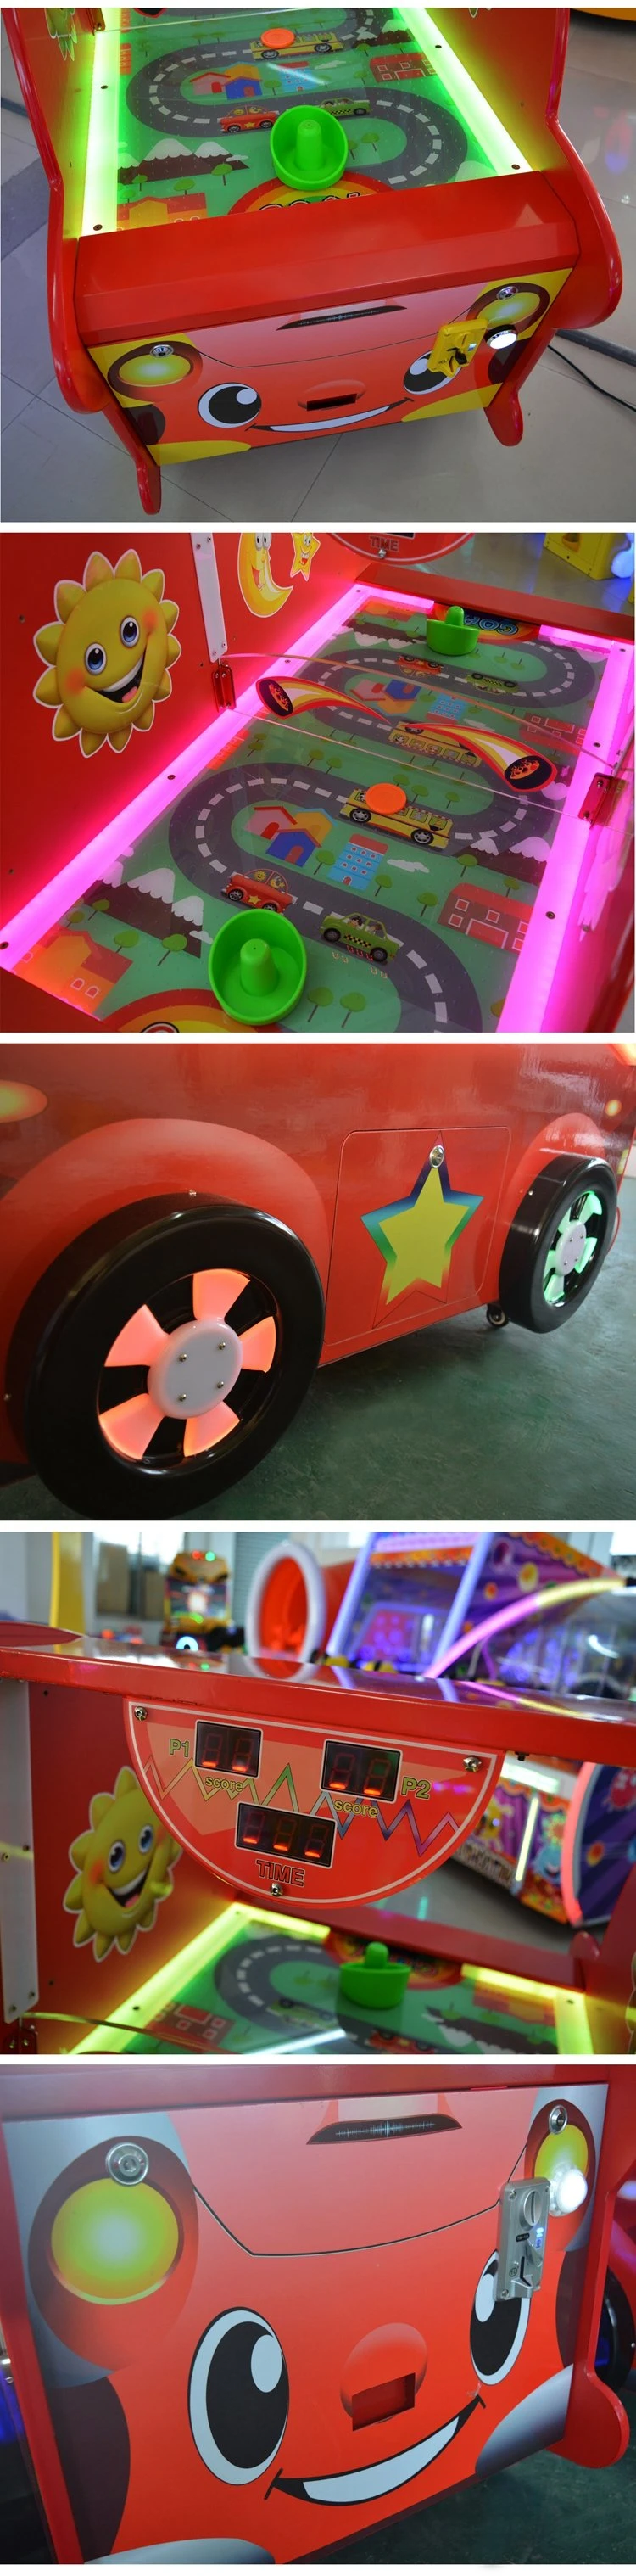 Hottest Arcade Machine Redemption Table Games Kids Baby Car Air Hockey